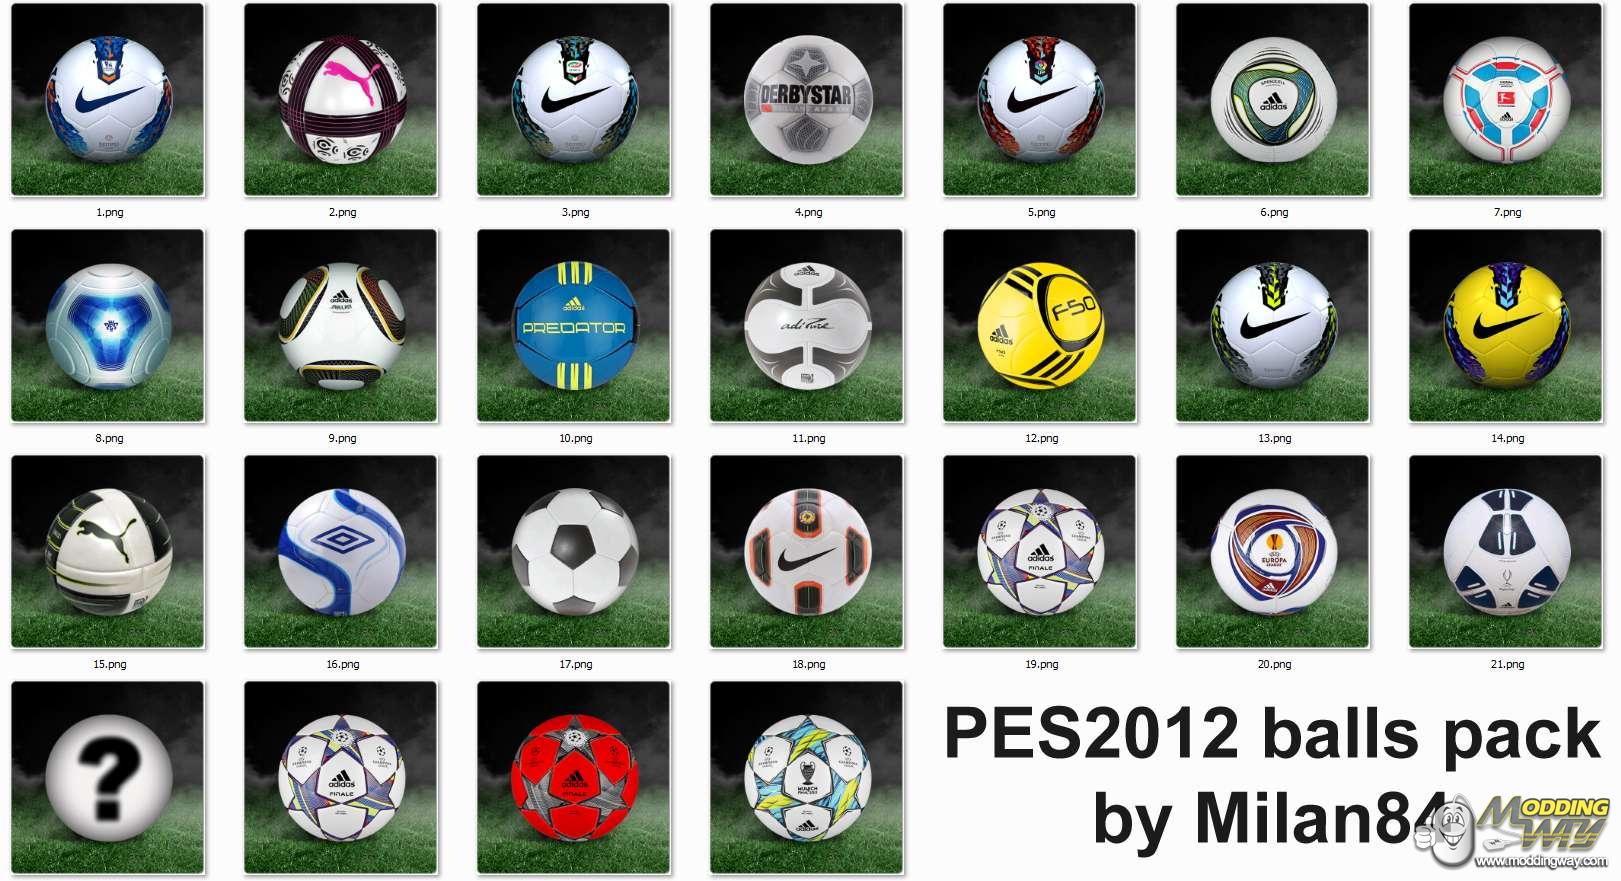 Mini Kits Pack Pes 2015 By Salichinko v0.3 - Pro Evolution Soccer 2015 at  ModdingWay